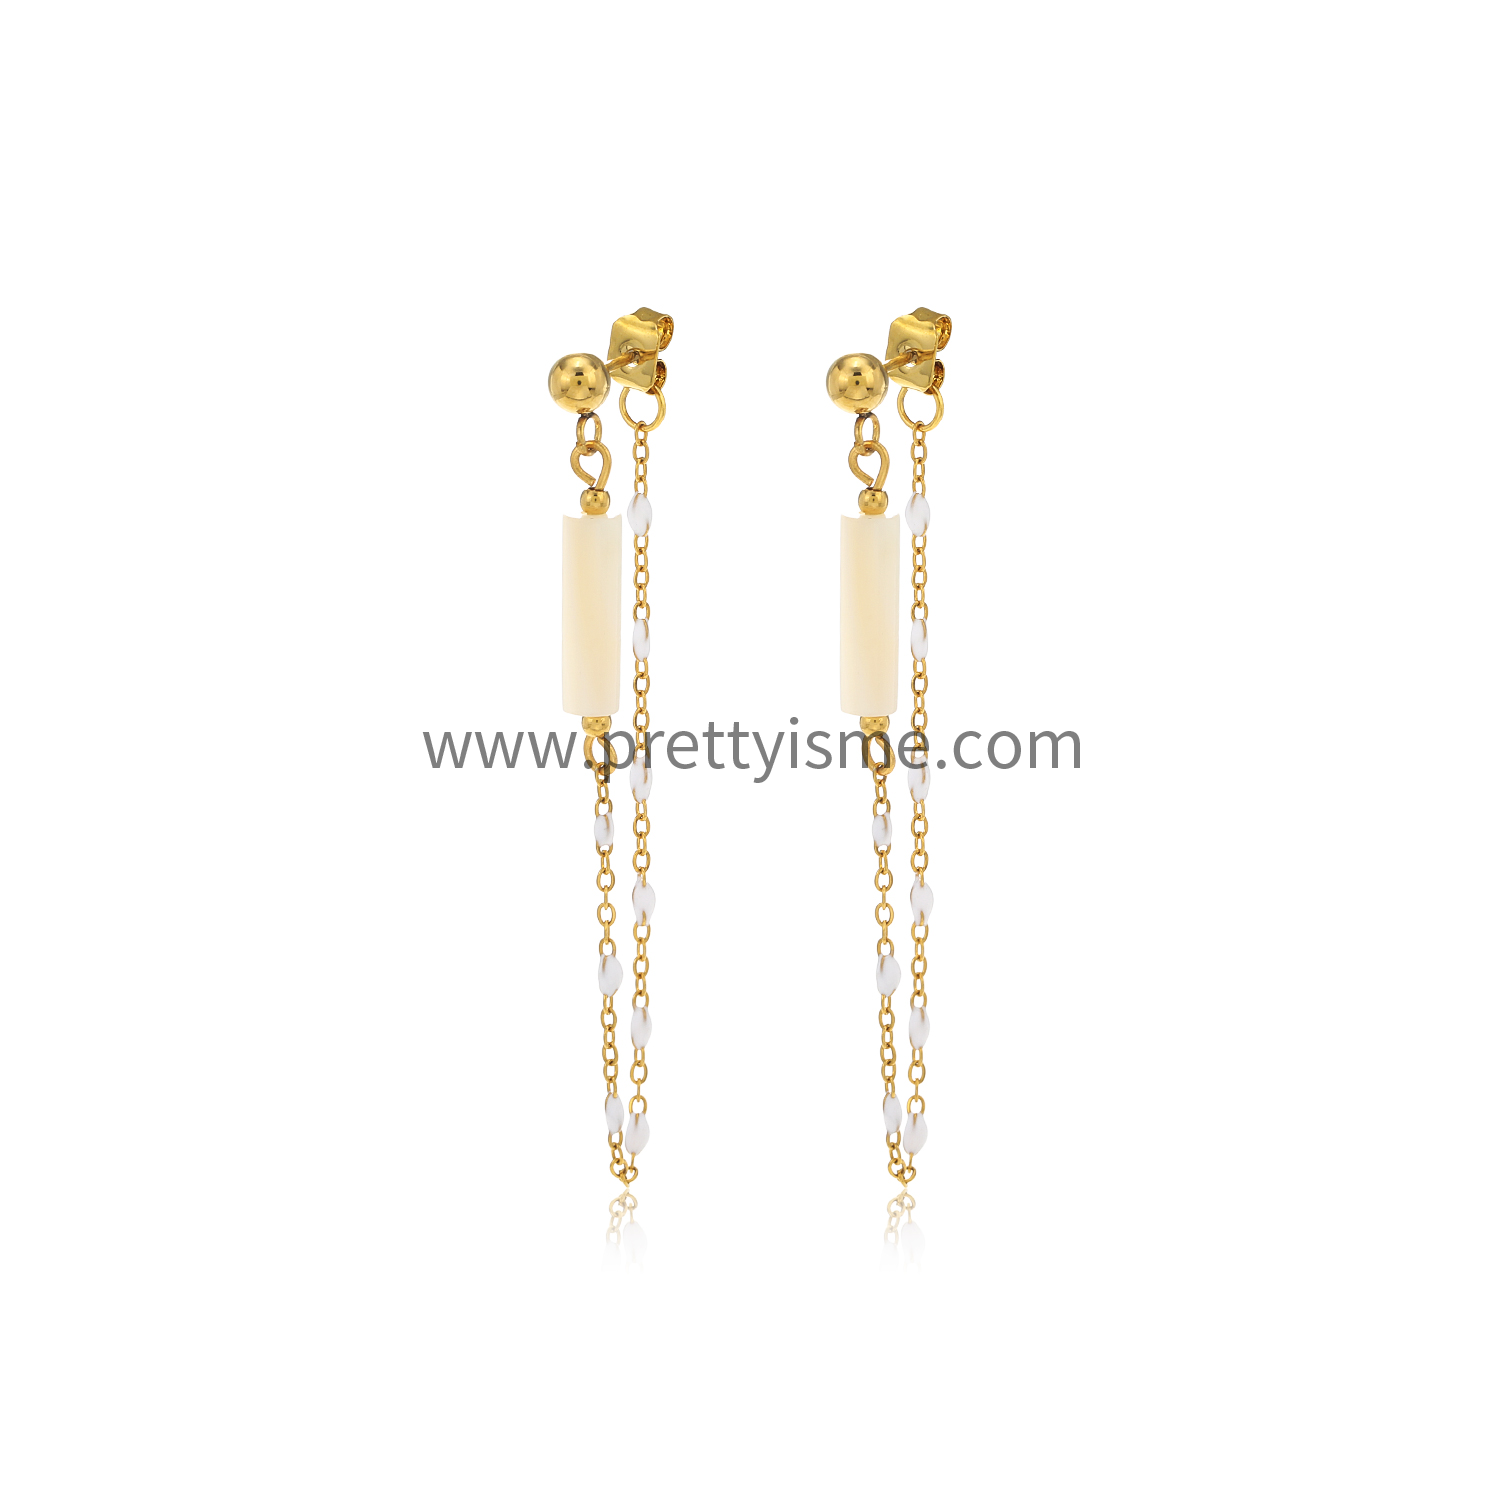 Long Chain Stainless Steel Earrings Gold Plated 18K with White Tube Earrings (5).webp